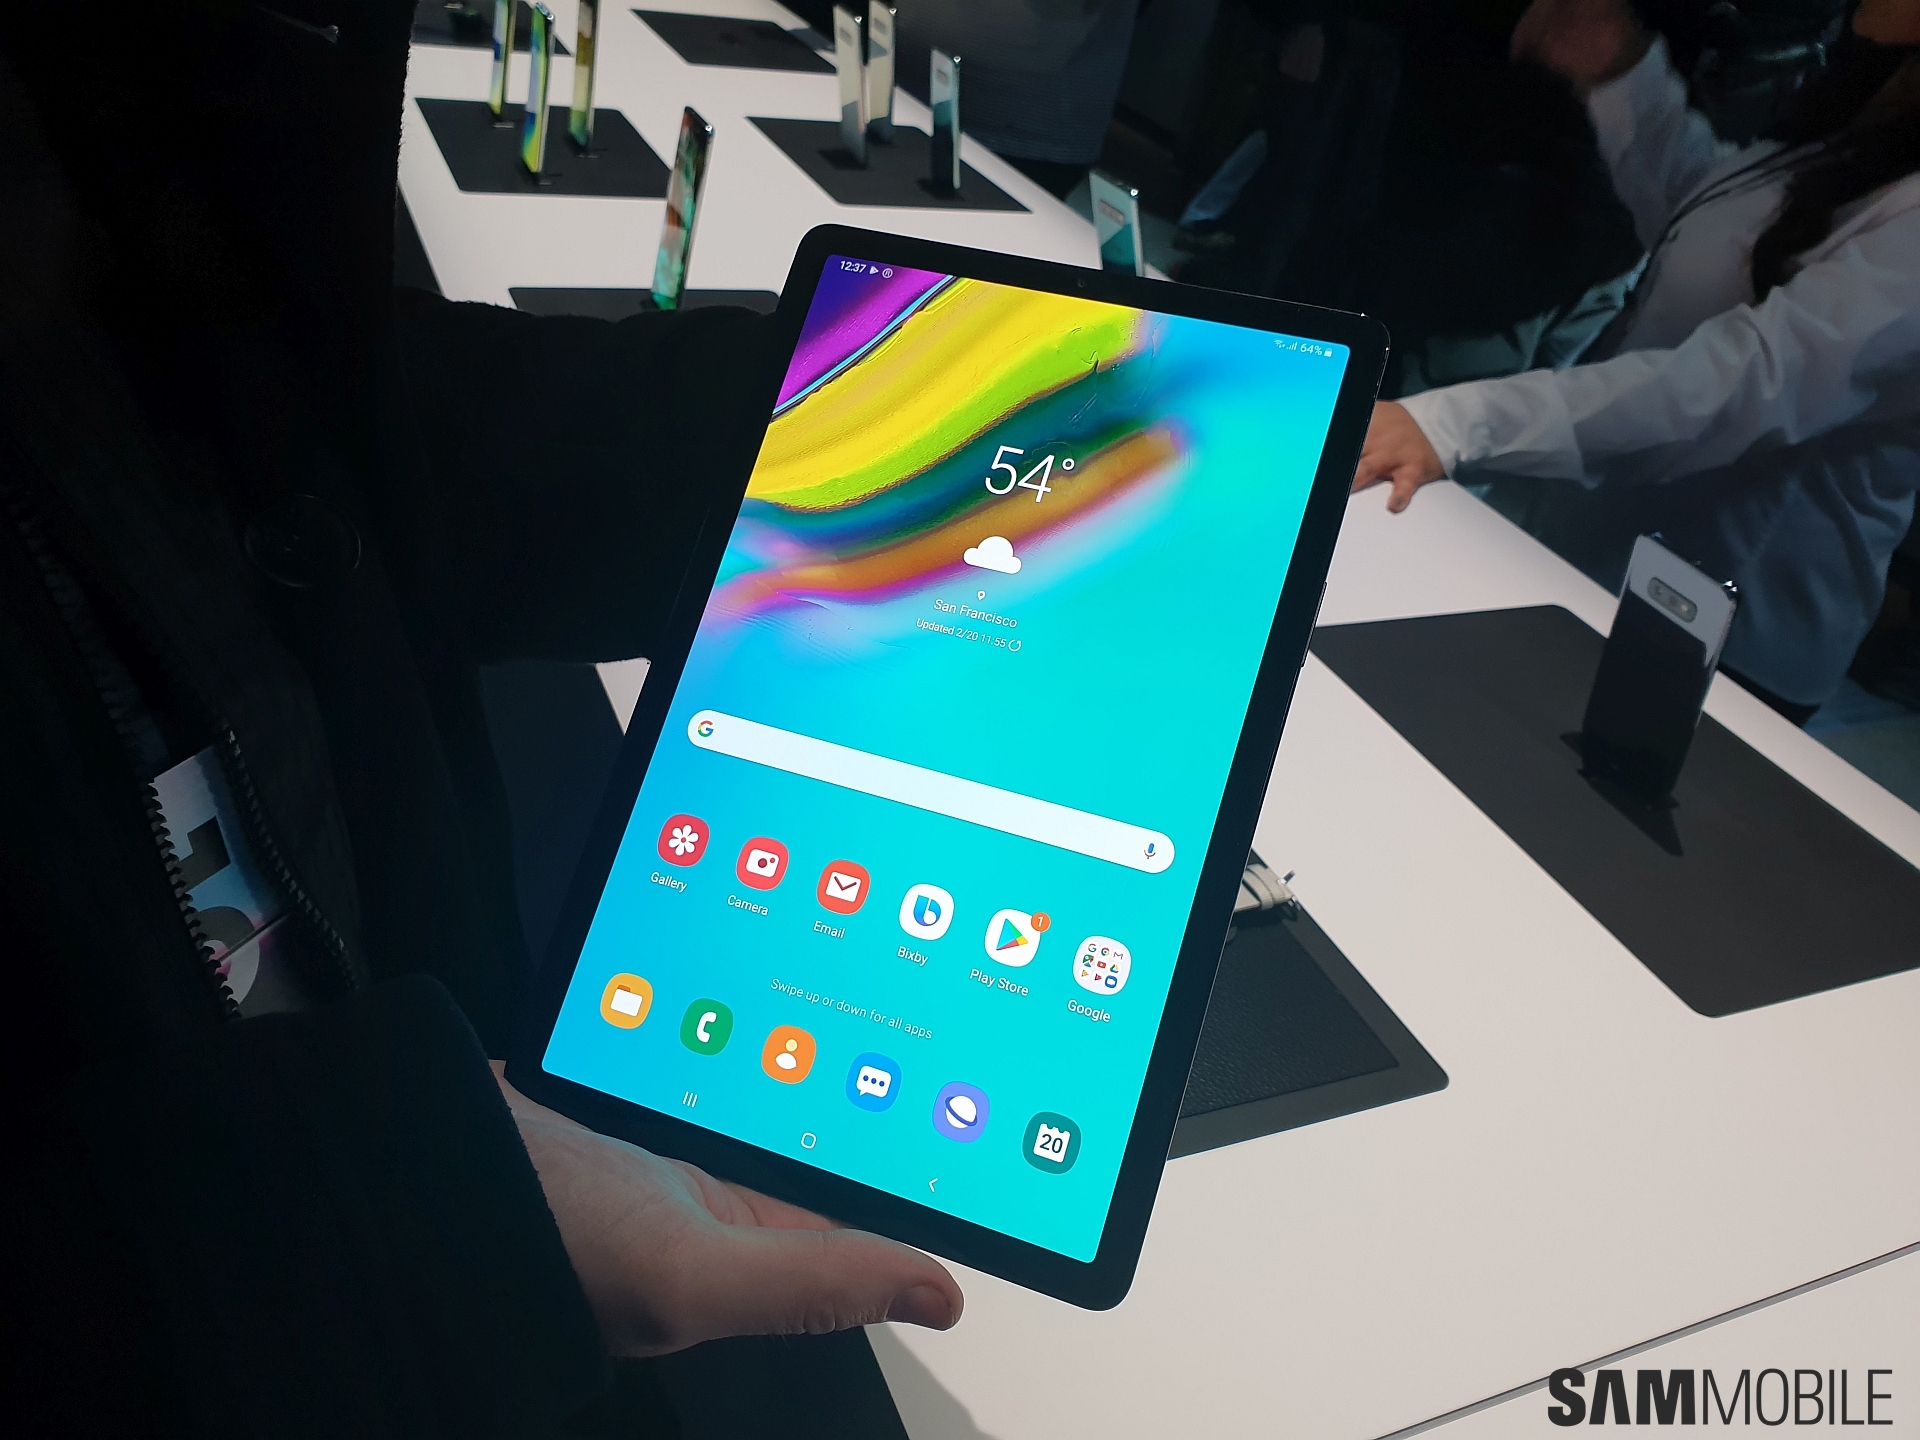 Samsung Galaxy Tab S5e handson: An affordable AMOLED display tablet  SamMobile